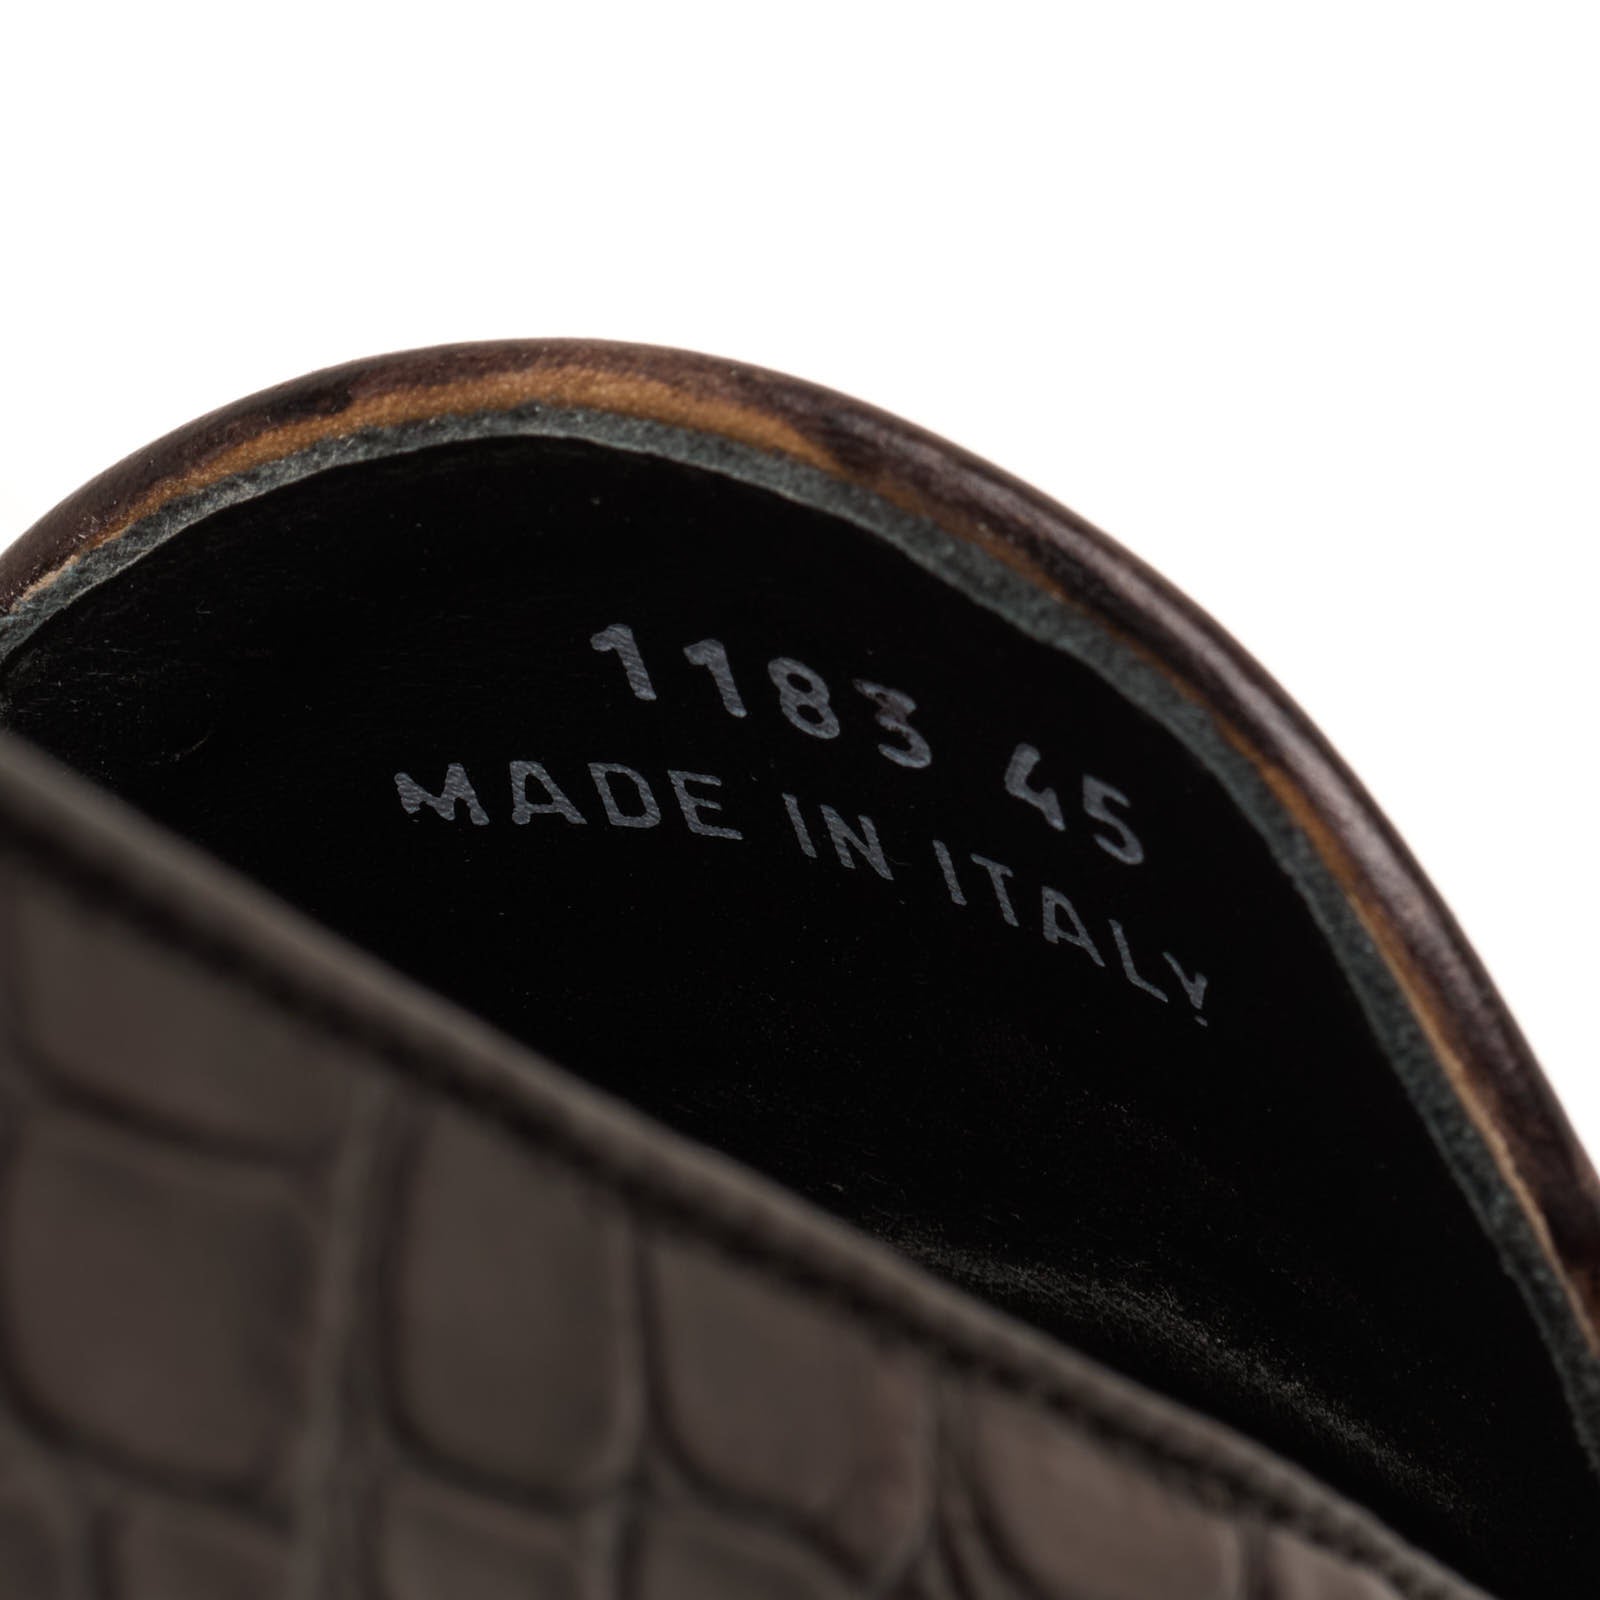 VANNUCCI Dark Brown Genuine Crocodile Leather Loafers Shoes EU 45 NEW US 11.5